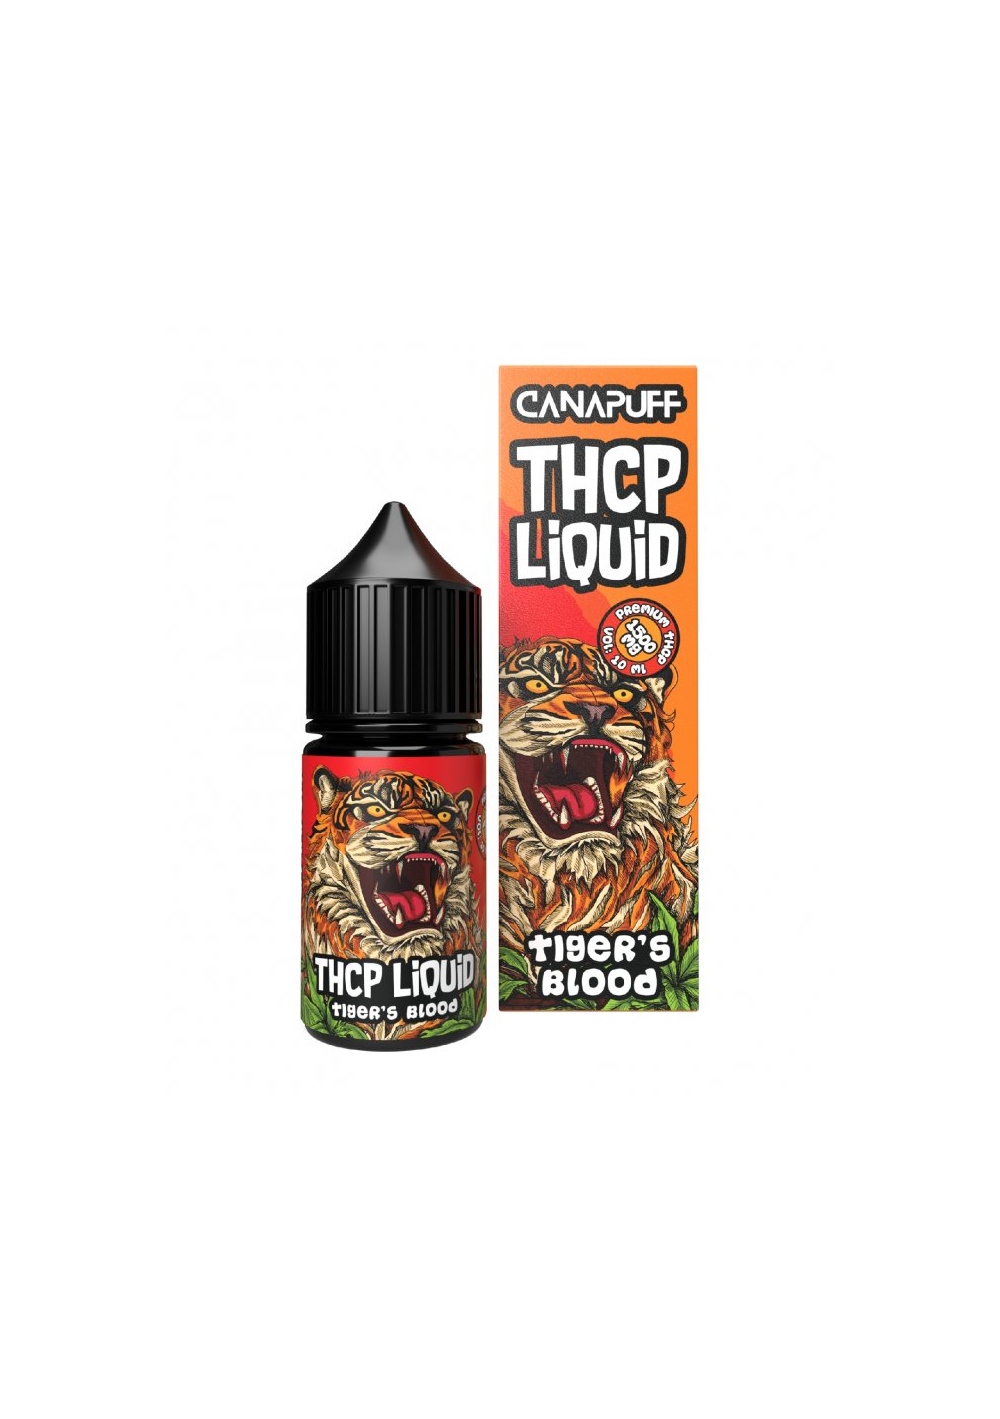 THC-P Liquido Svapo 79% - Tiger's Blood, 10ml - 1500mg THCp - Canapuff